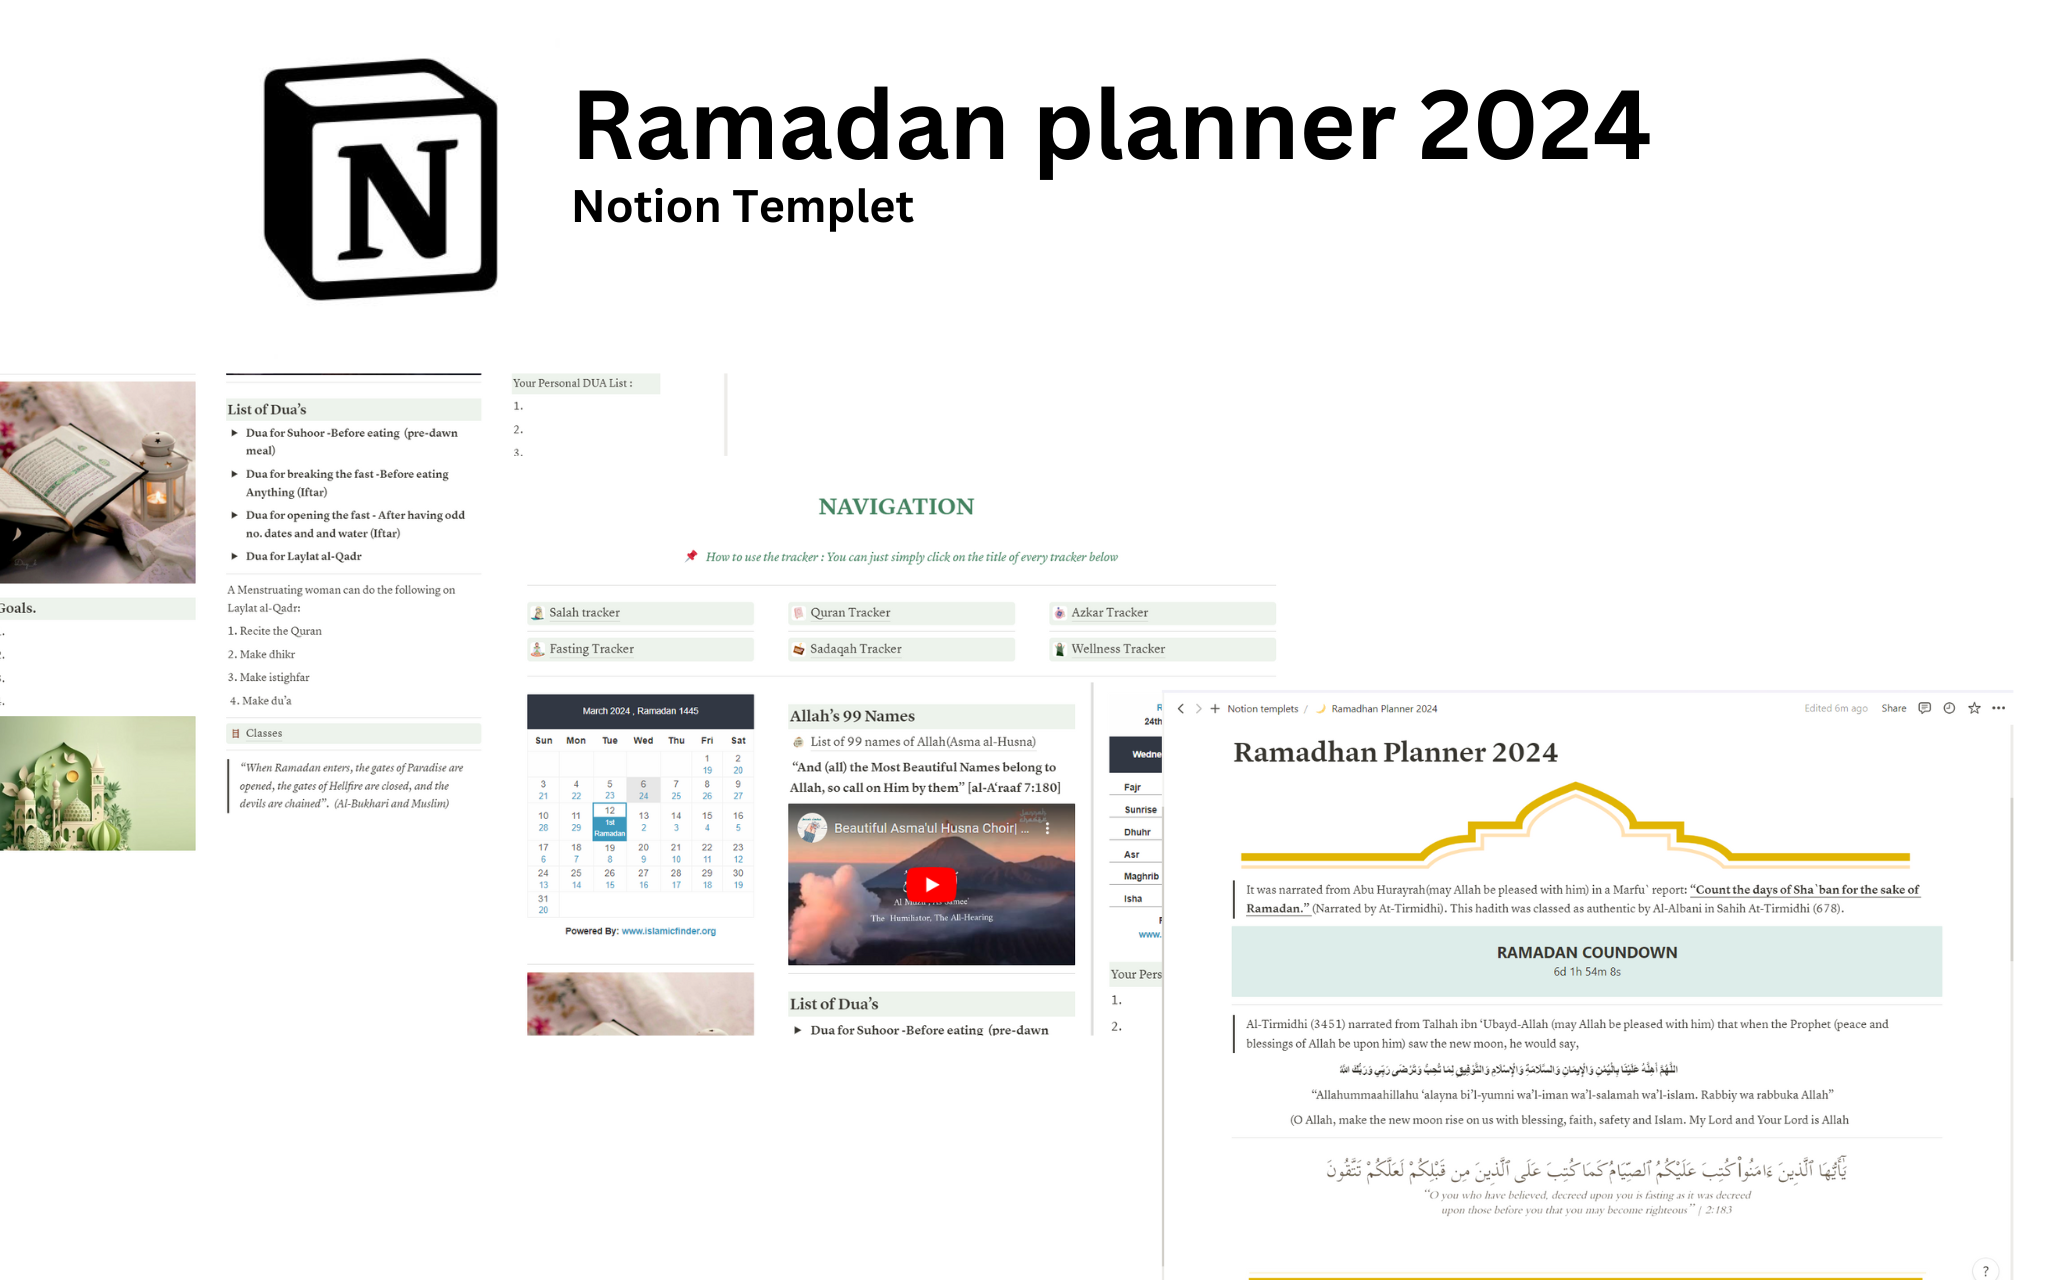 Ramadan planner for 2024